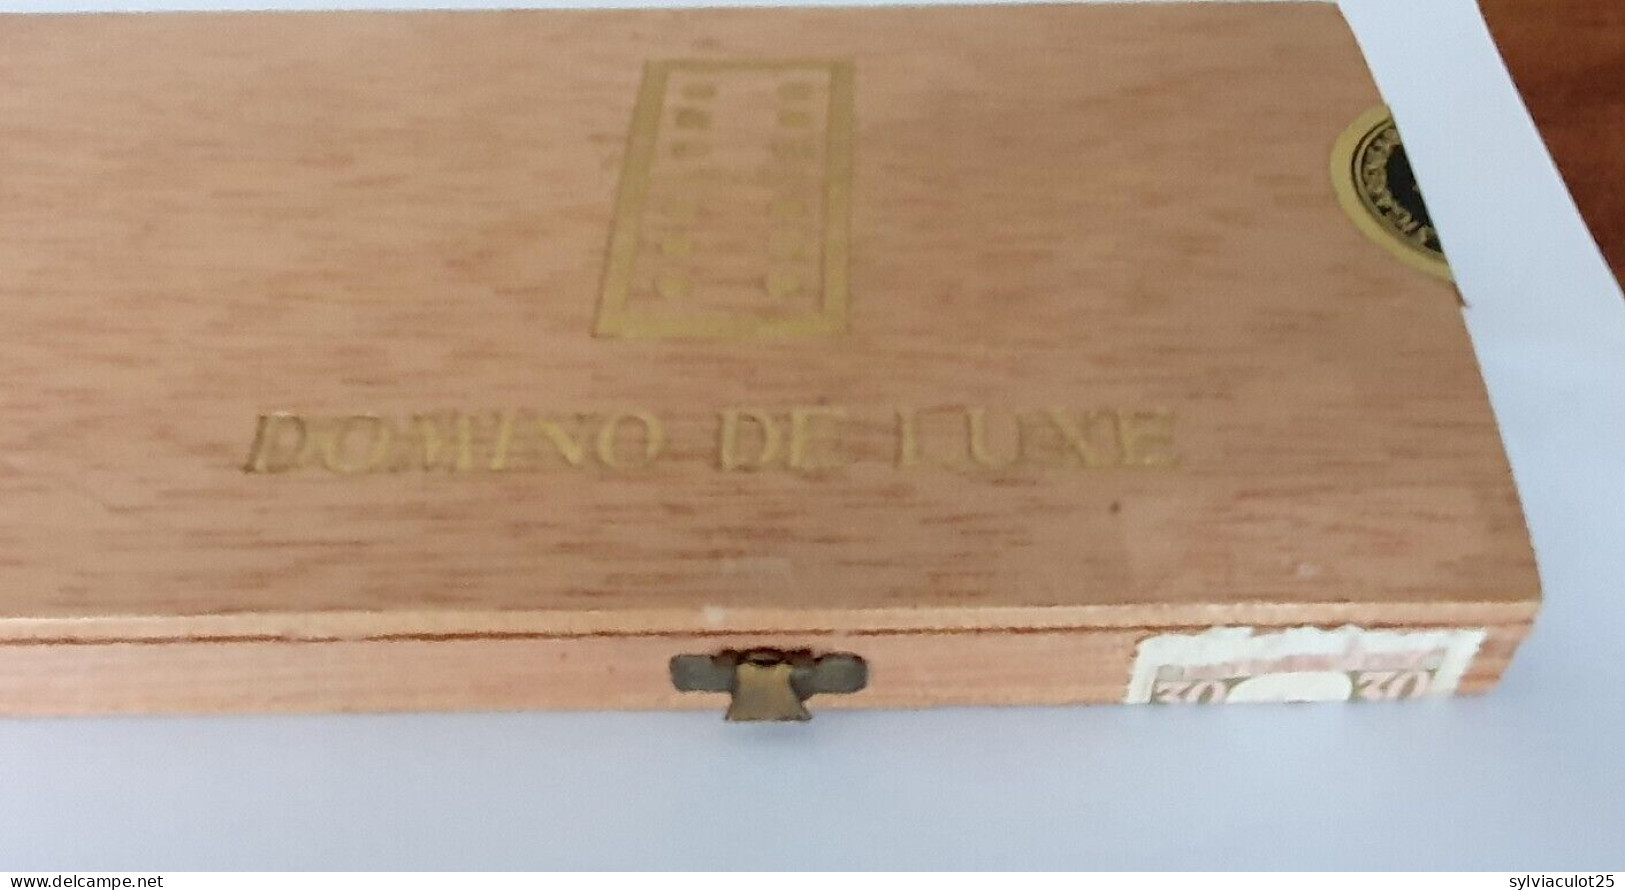 Boite de Cigares Panter Domino de Luxe 50 Zigarren Chasse à Courre Cigars Box - Timbre Fiscal Allemand